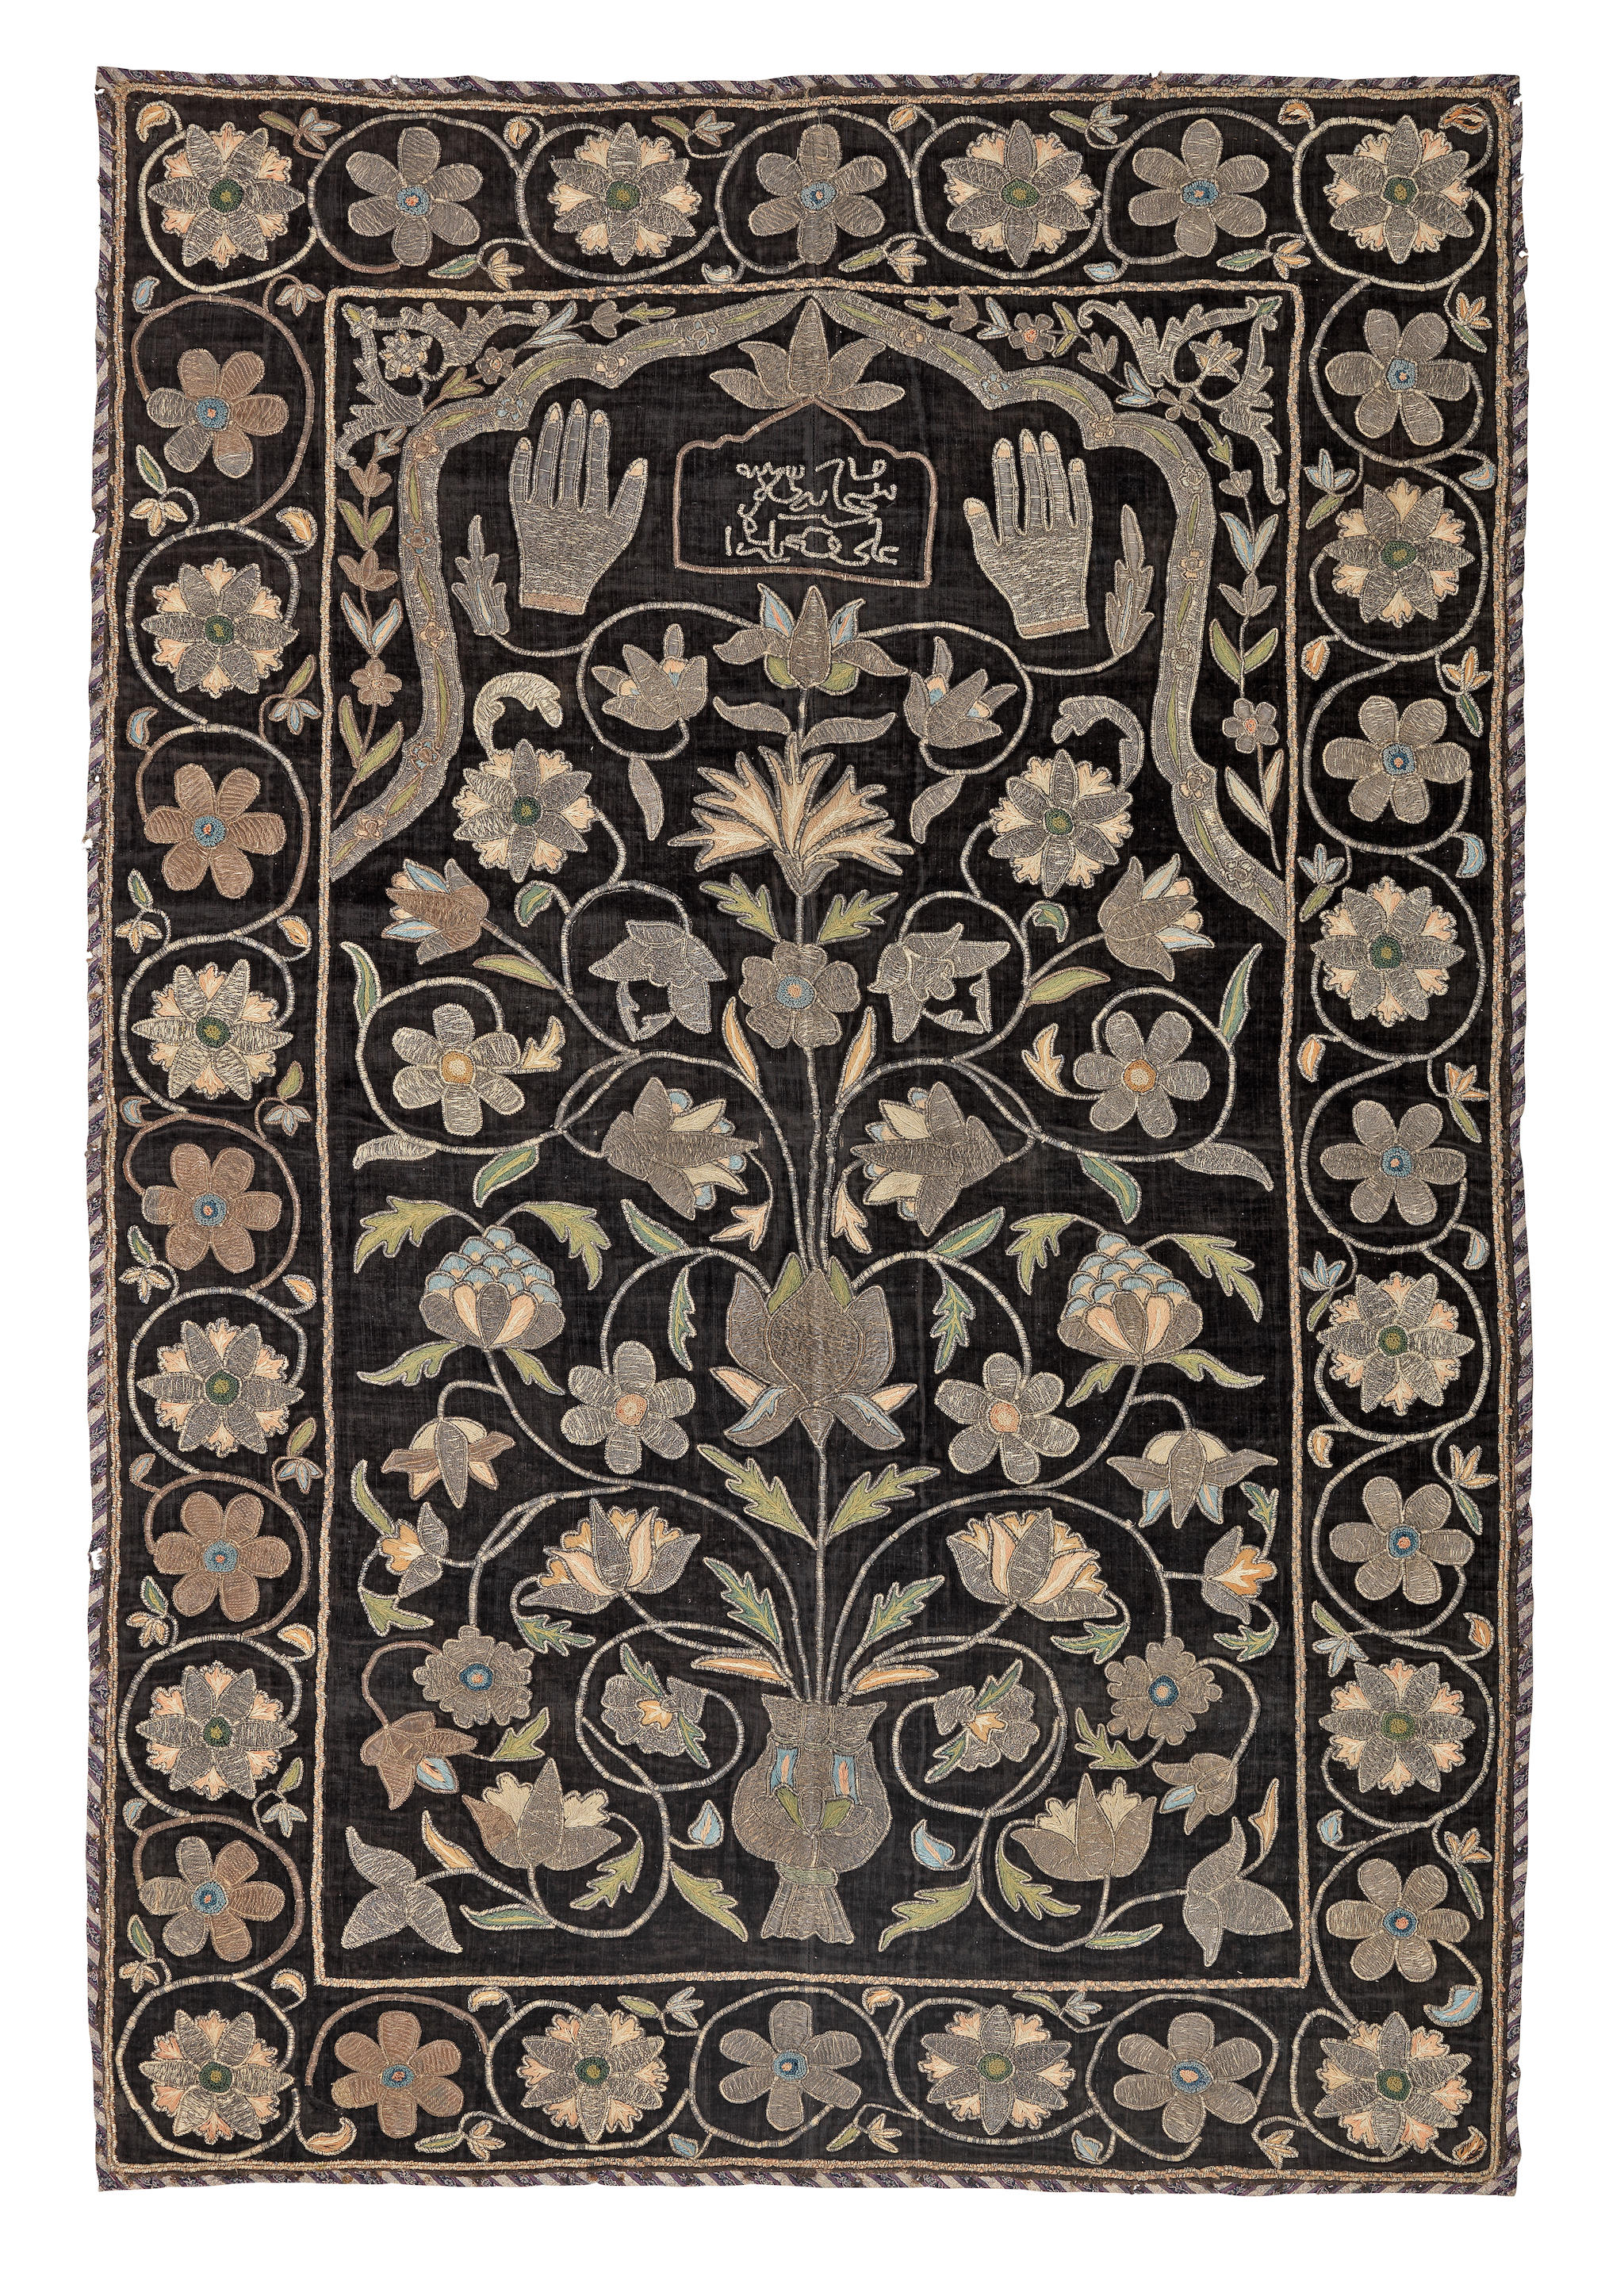 A Qajar silk and metal-thread embroidered prayer mat